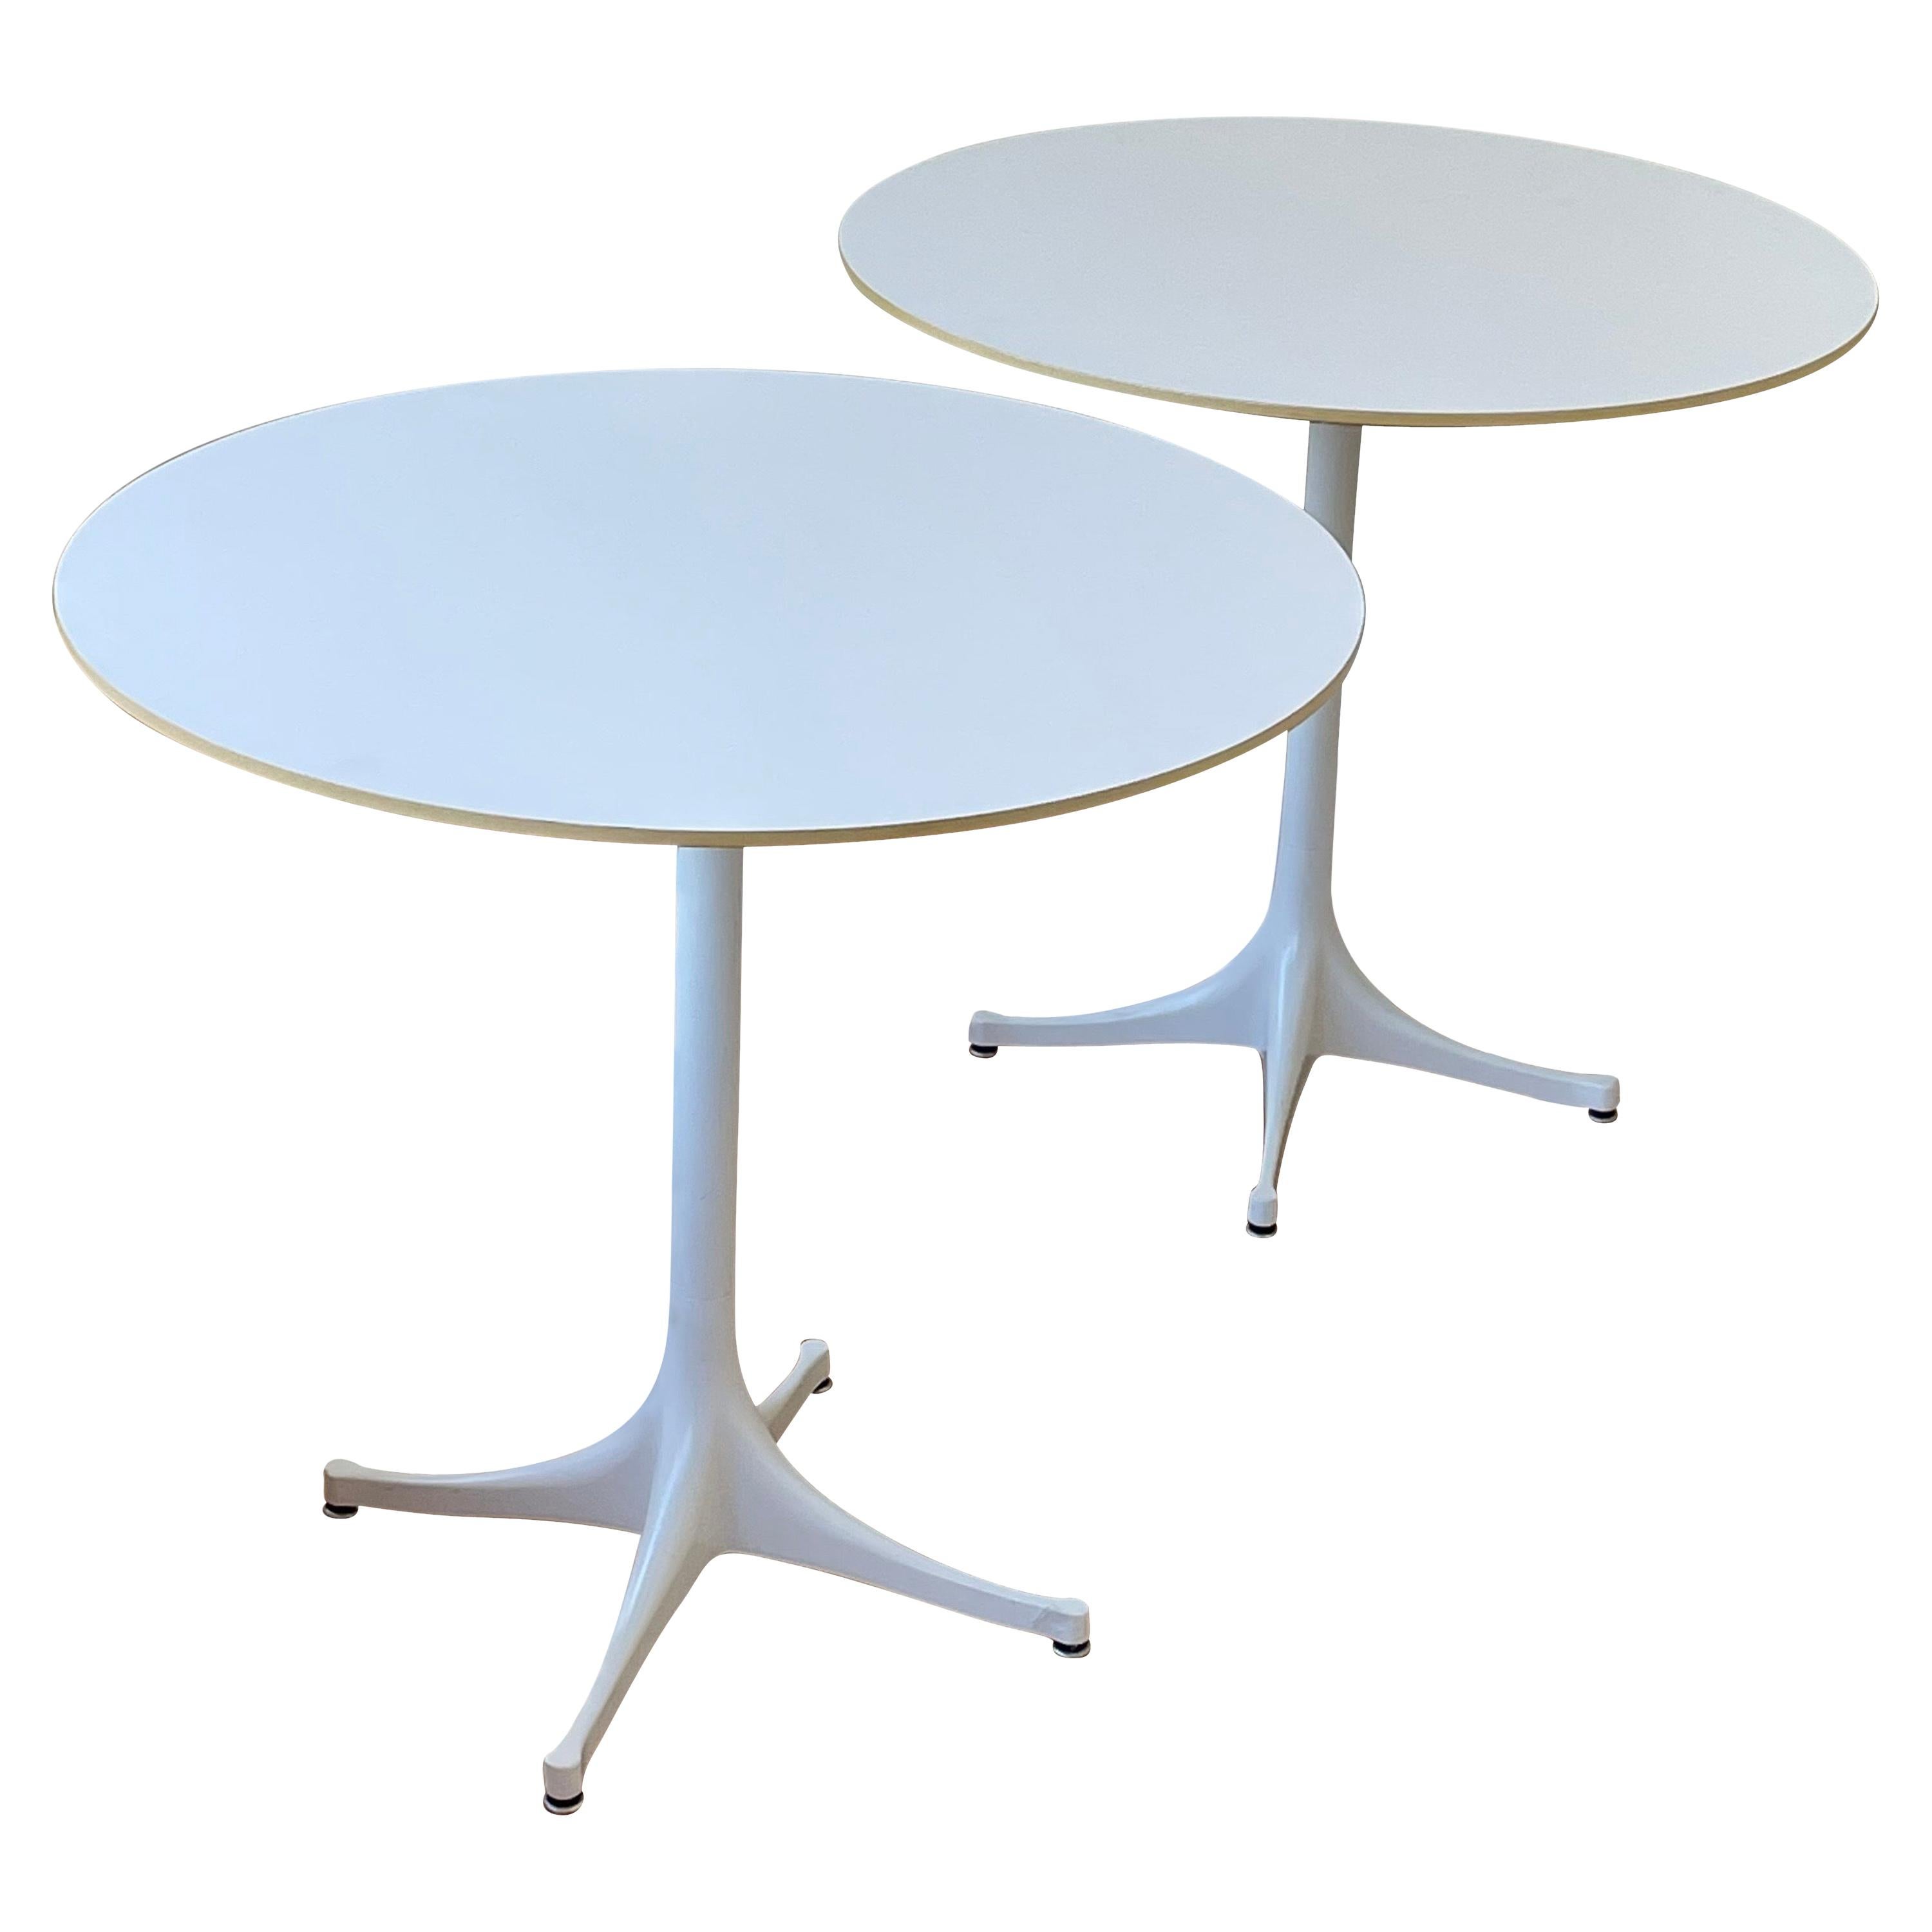 Pair of George Nelson Pedestal Table Model 5254 for Herman Miller